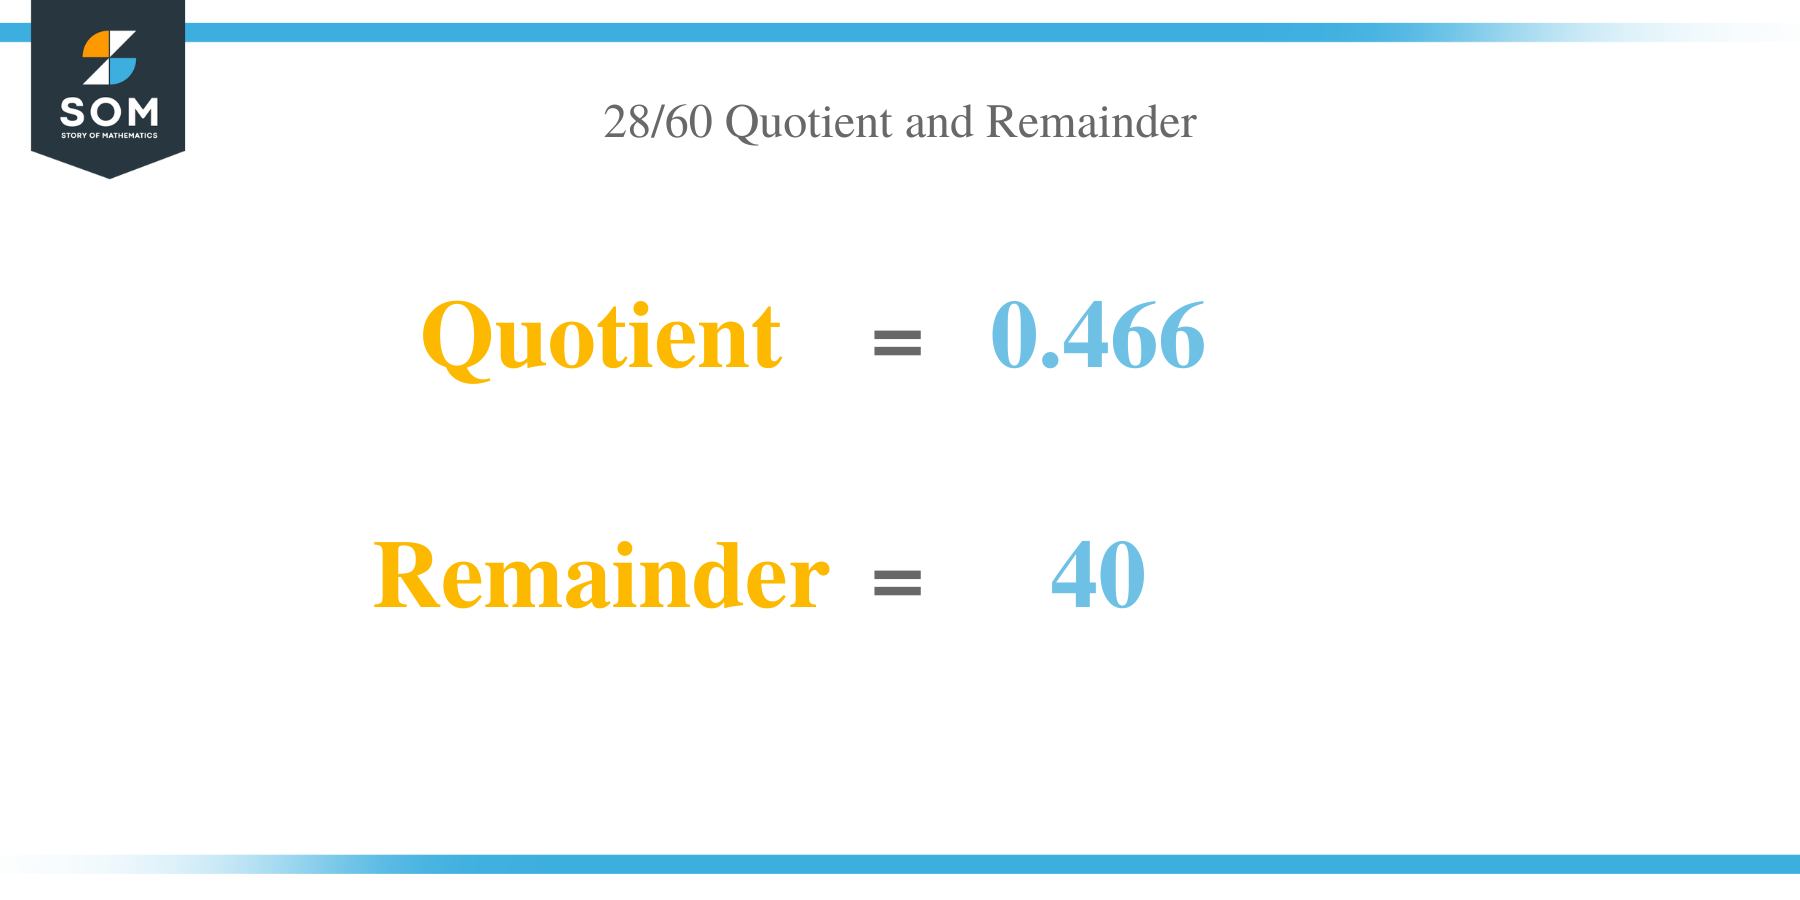 Quotient and Remainder of 28 per 60